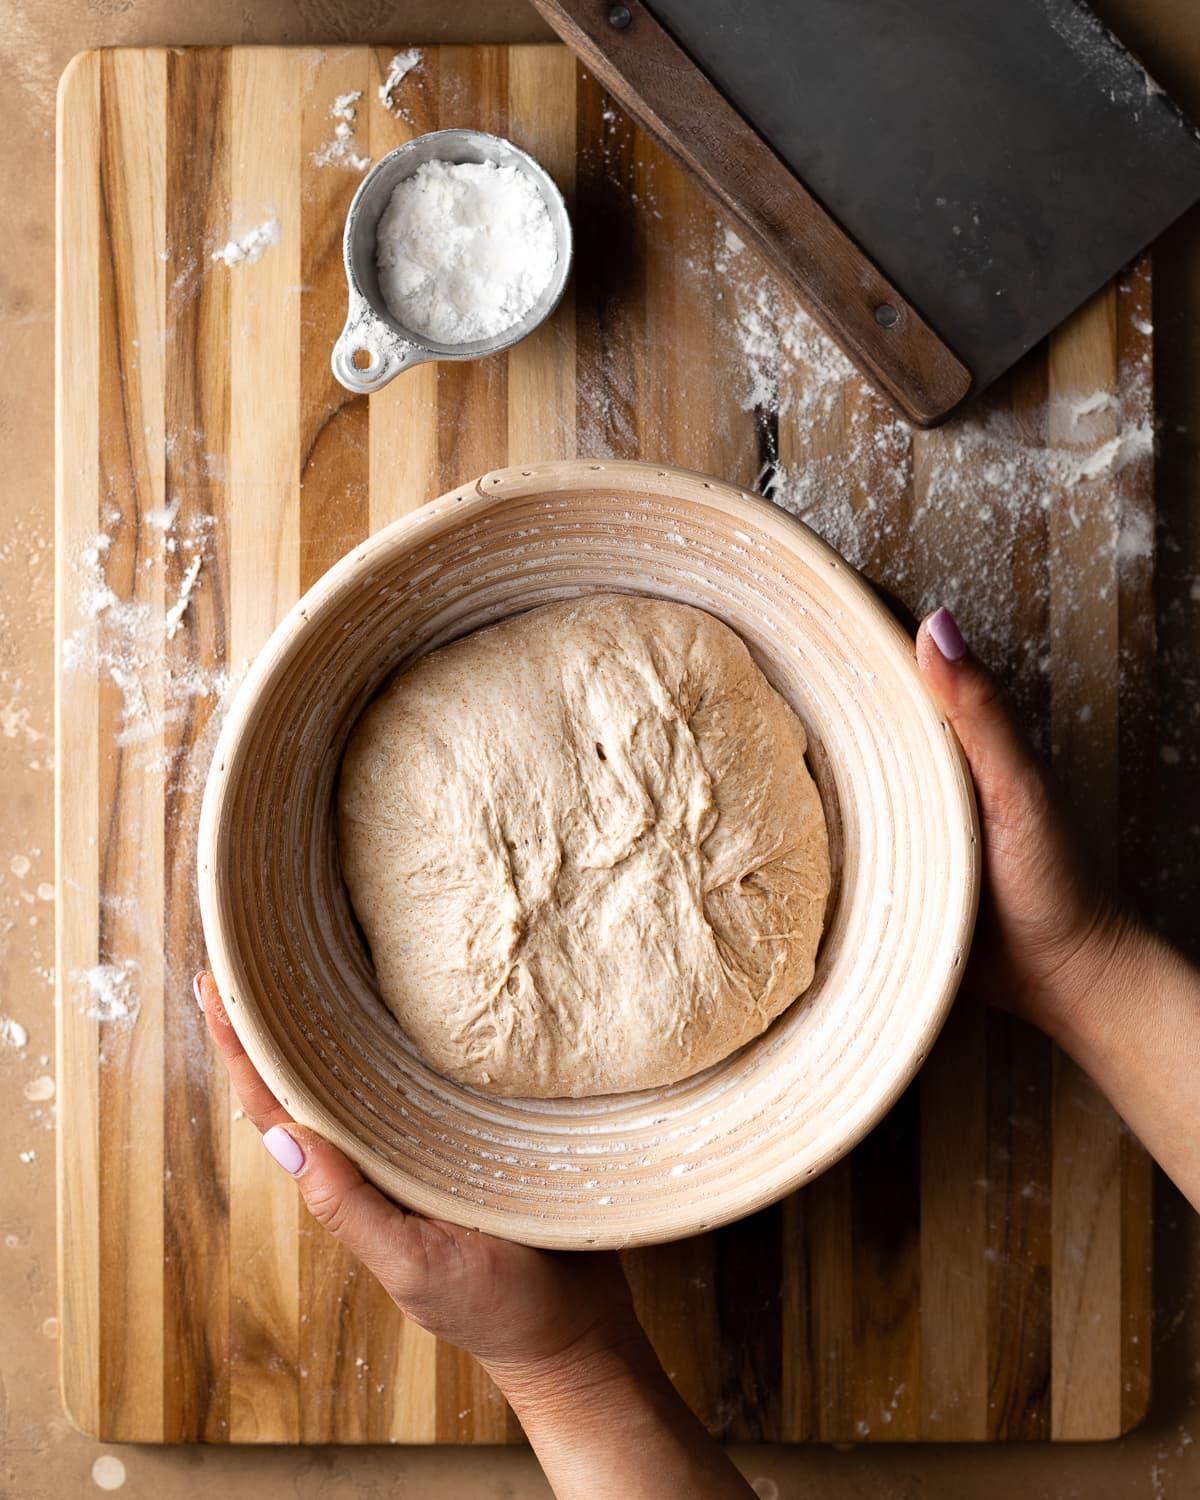 hands holding shaped sourdough dough inside a round banneton